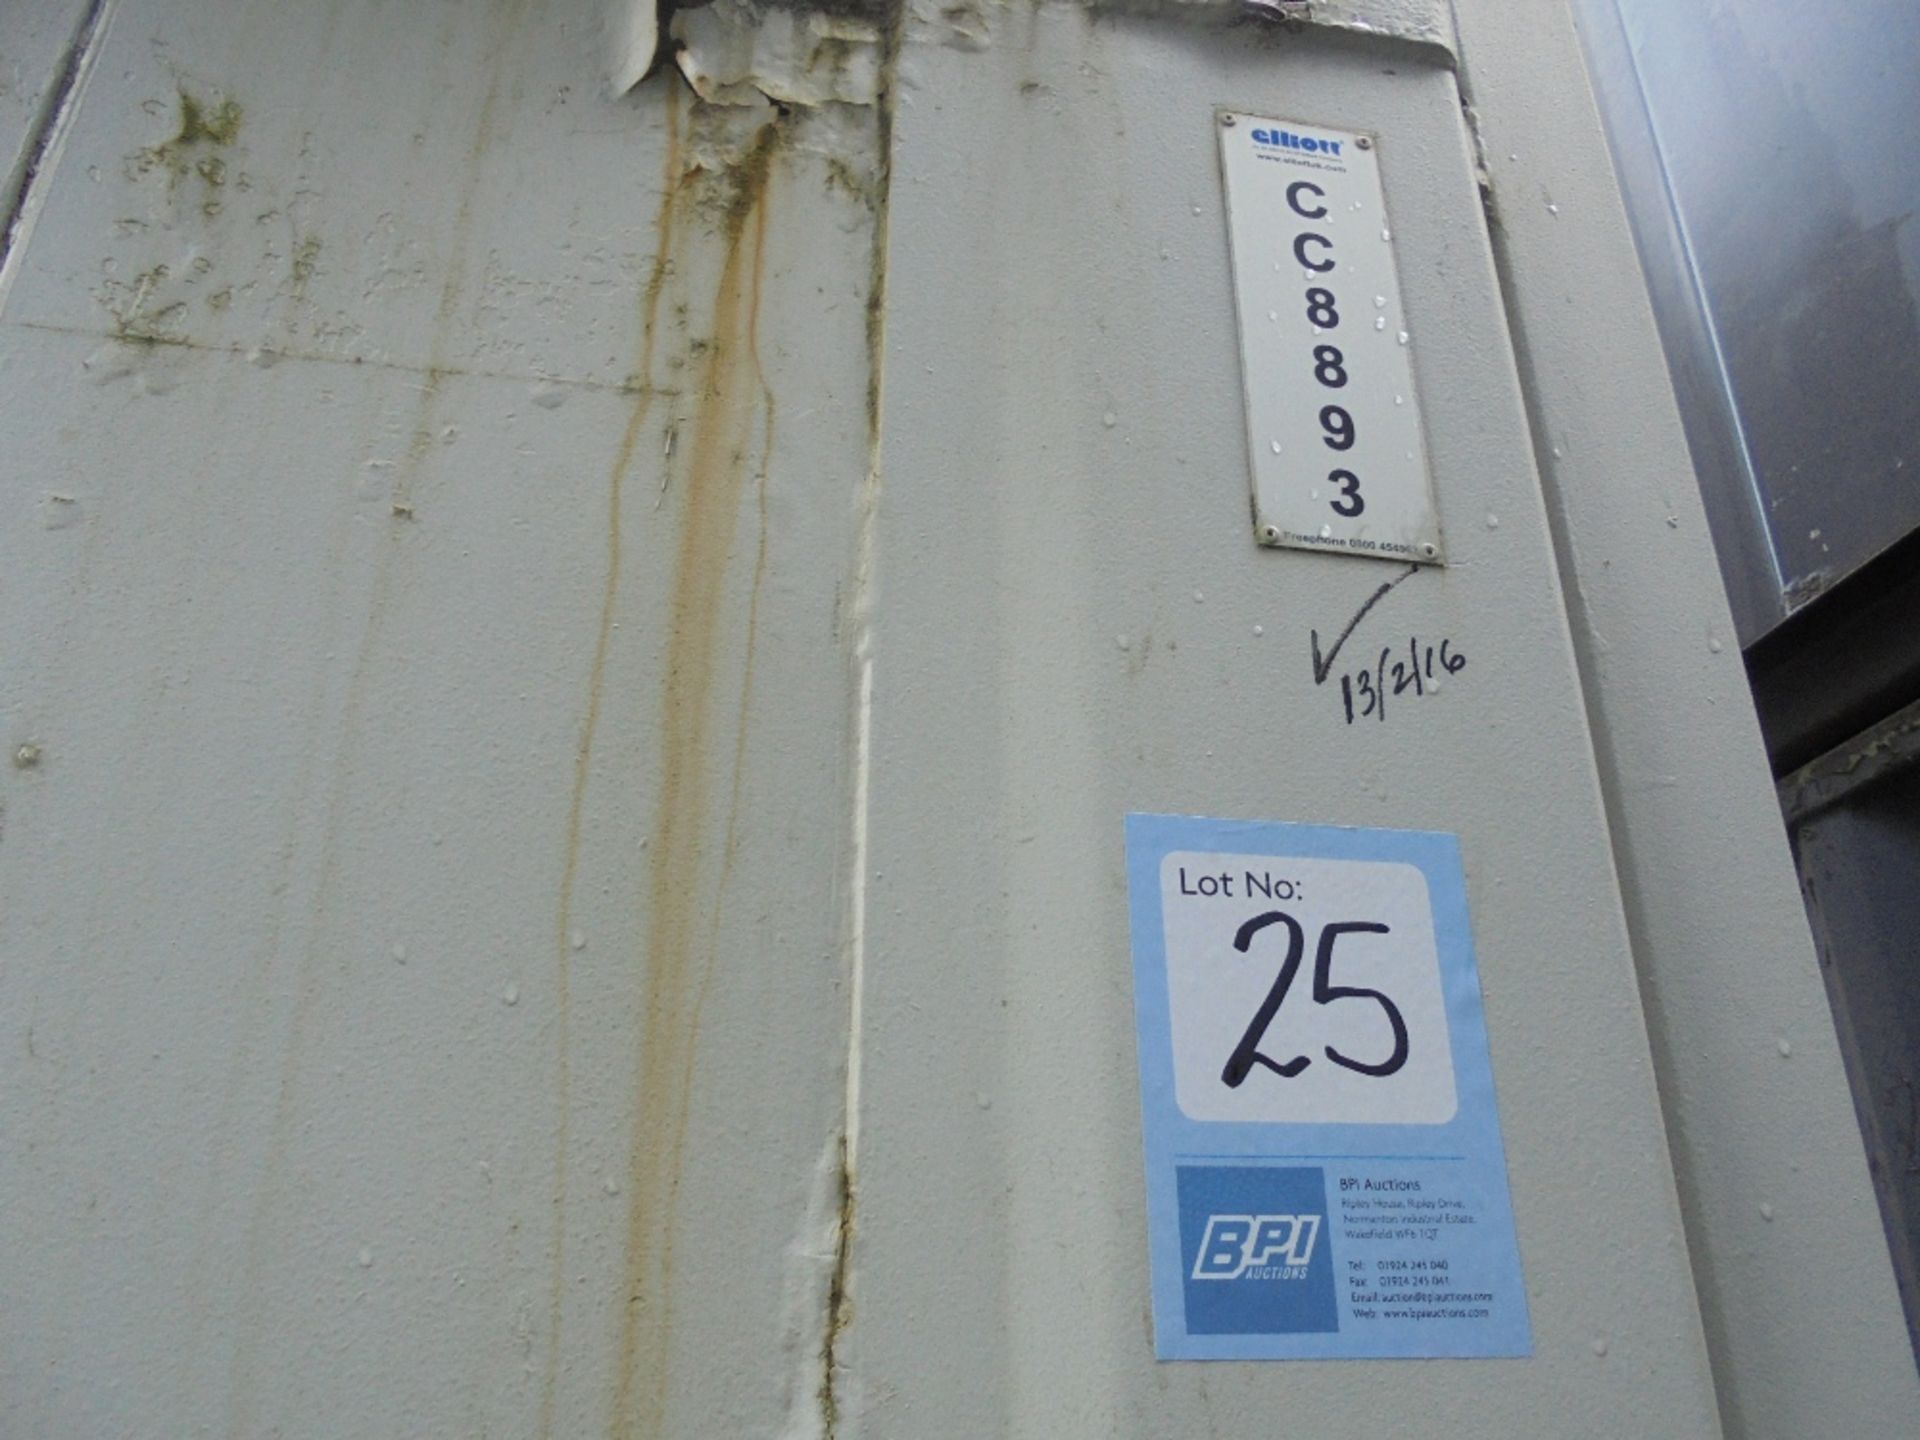 CC8893 21ft x 9ft Anti Vandal Jack Leg 6 Bay Shower Unit - Image 12 of 12